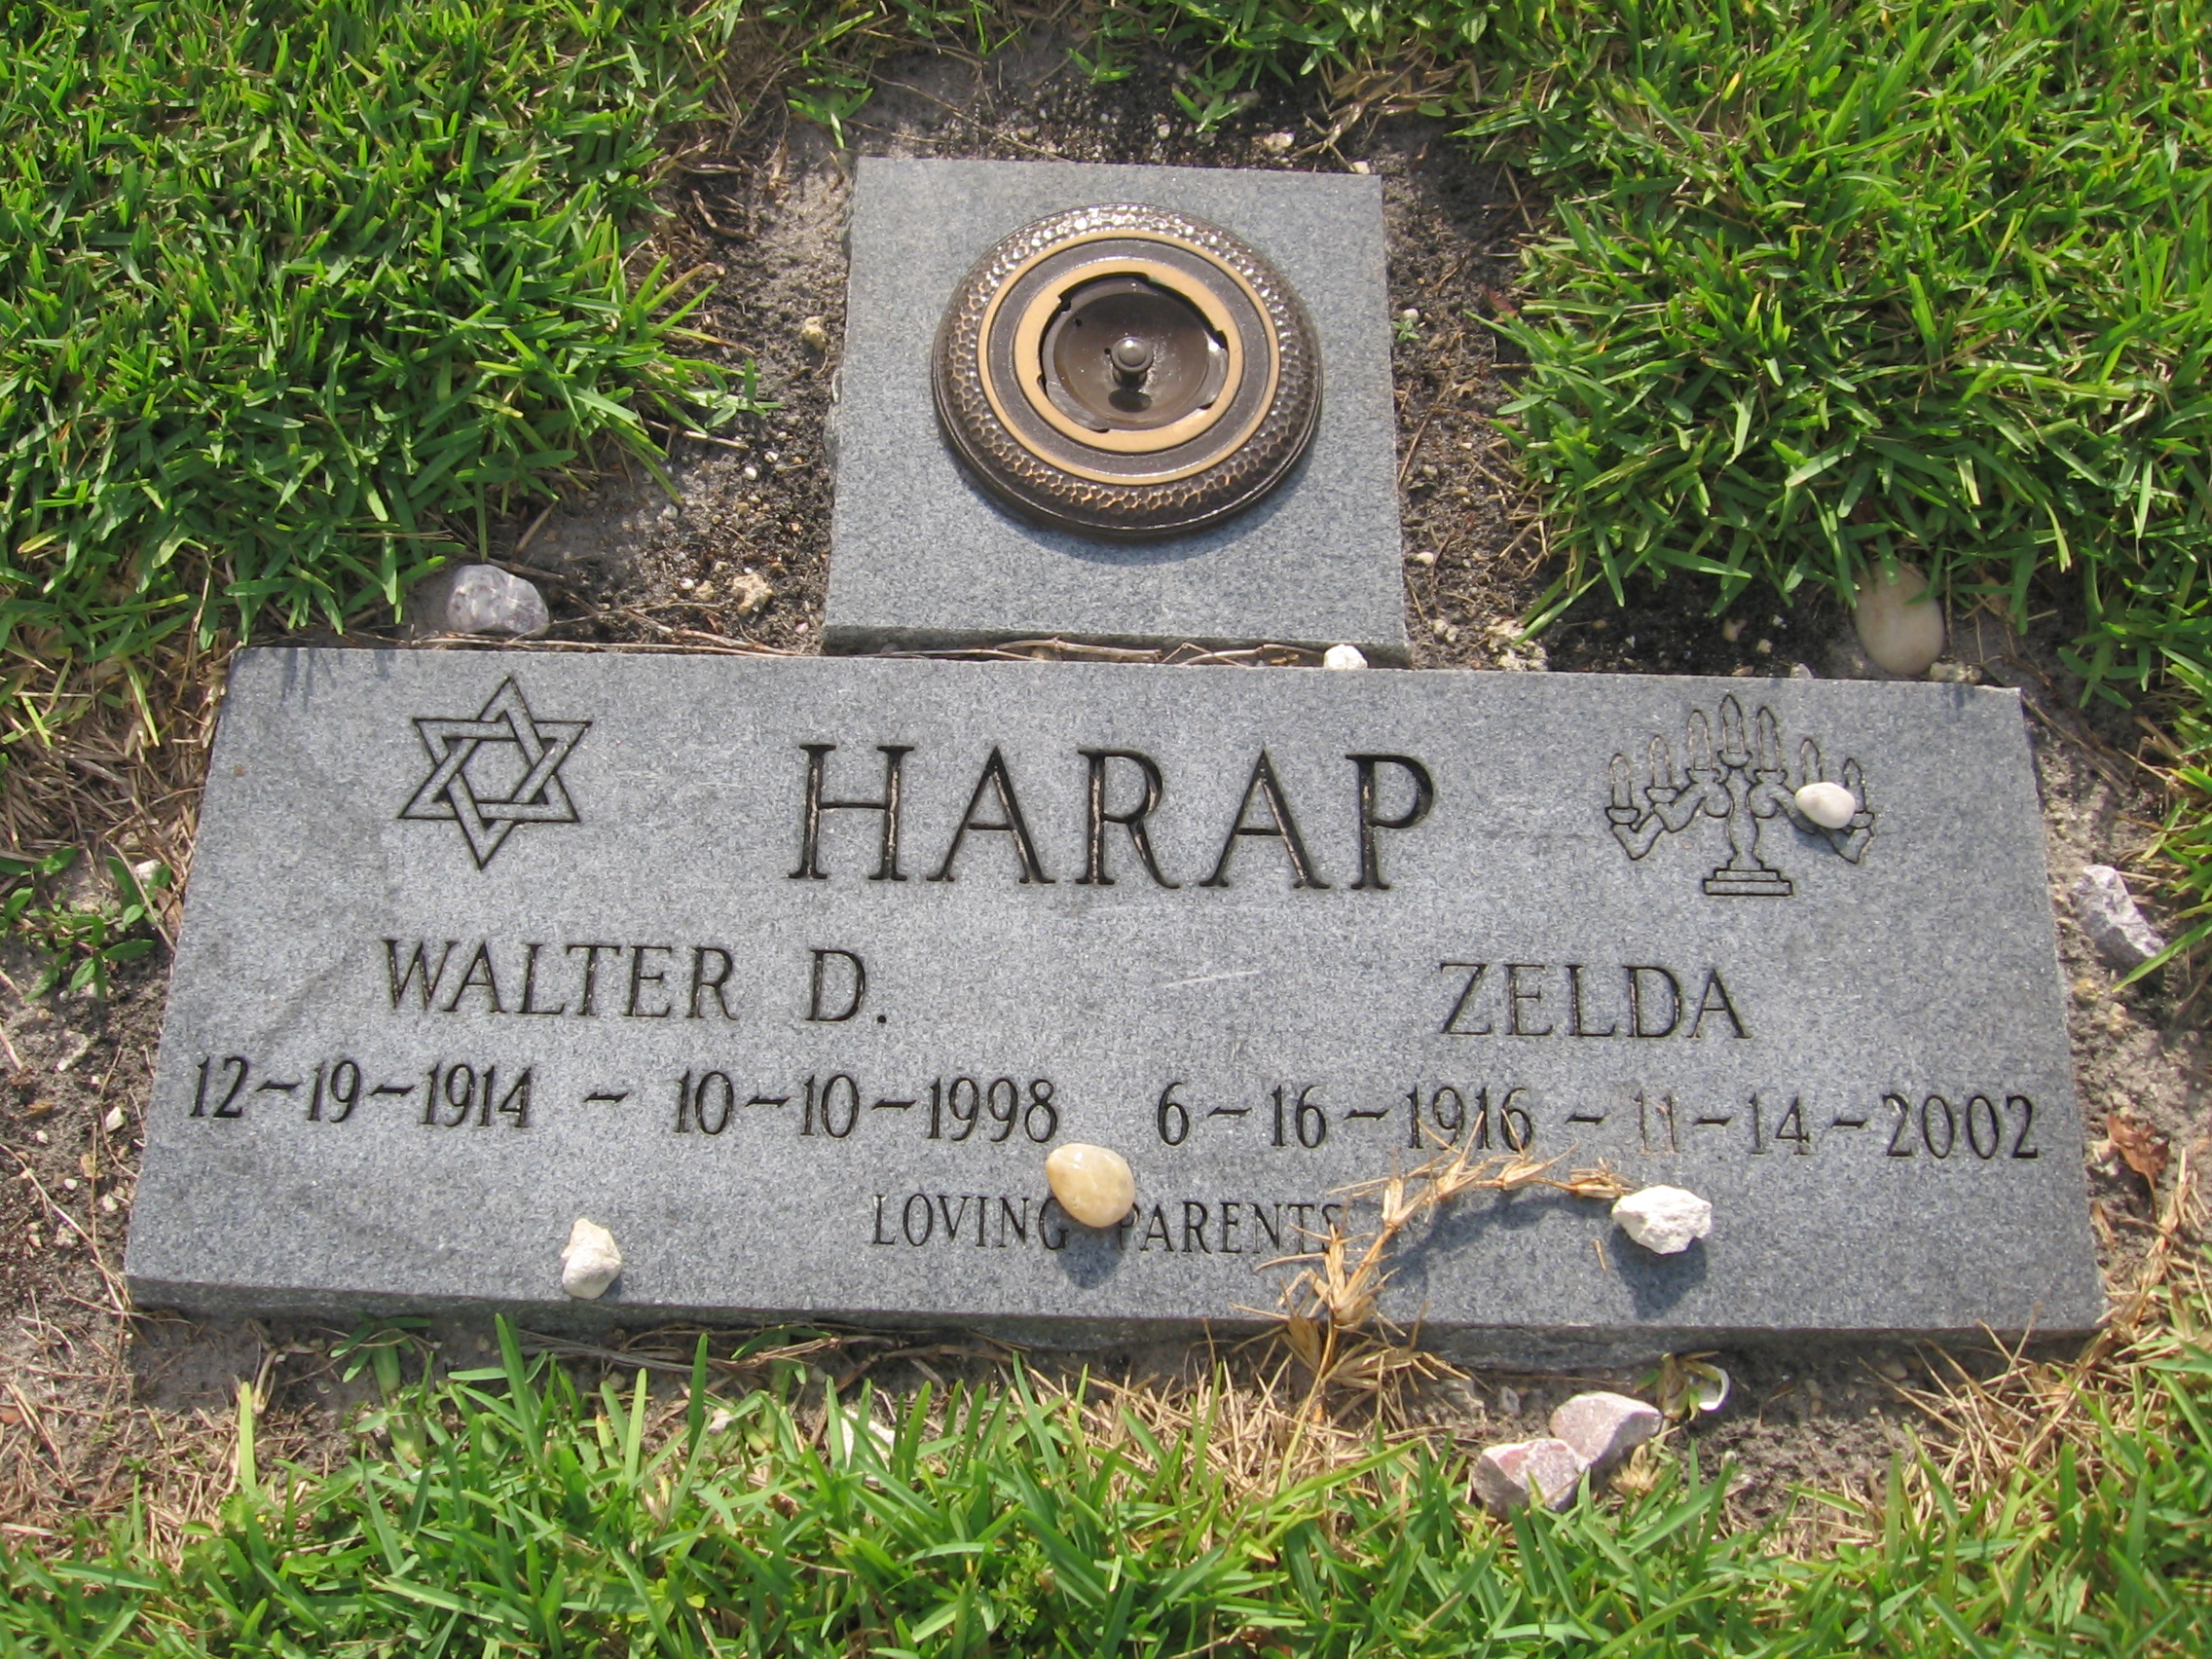 Walter D Harap